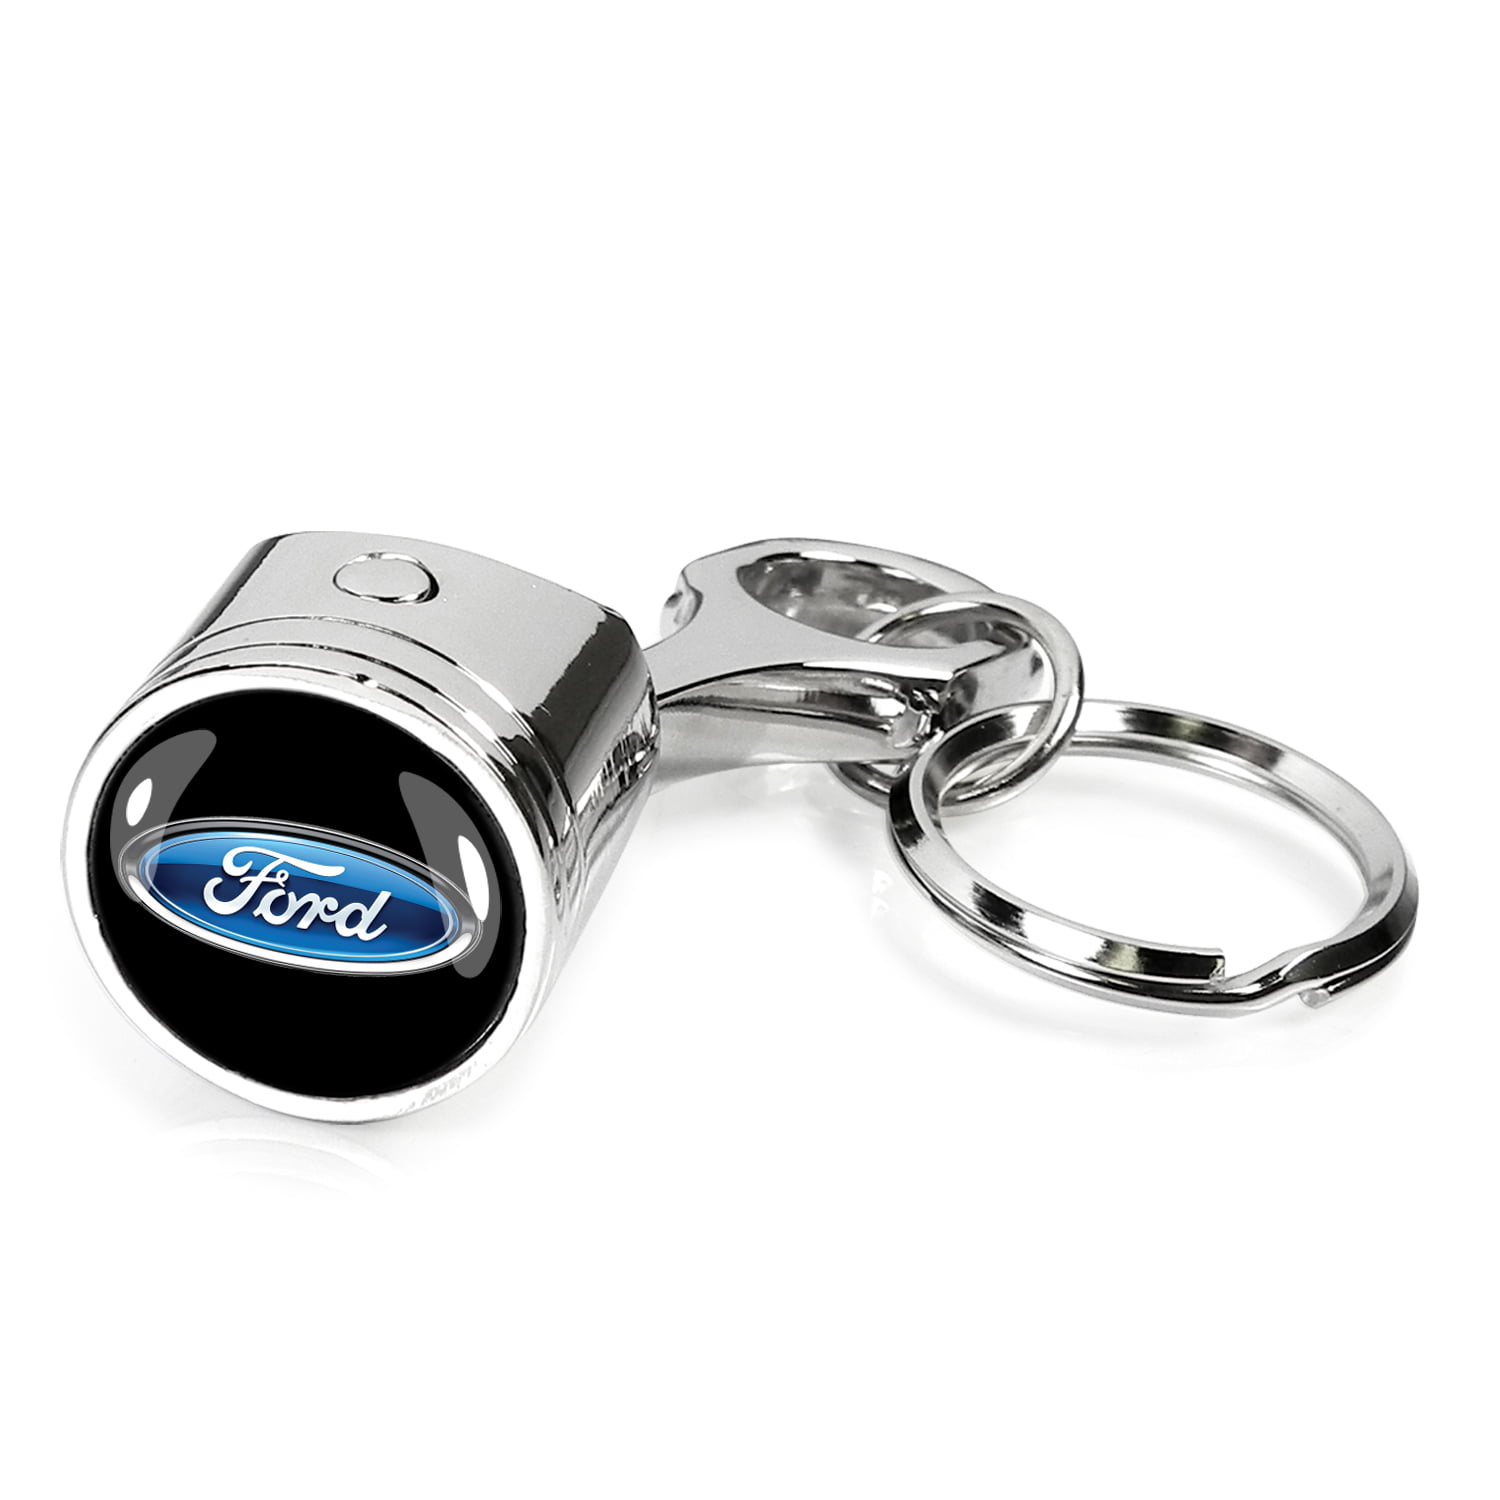 KIA Key ring Keyholder Chrome Logo emblem metal NEW key gift Auto